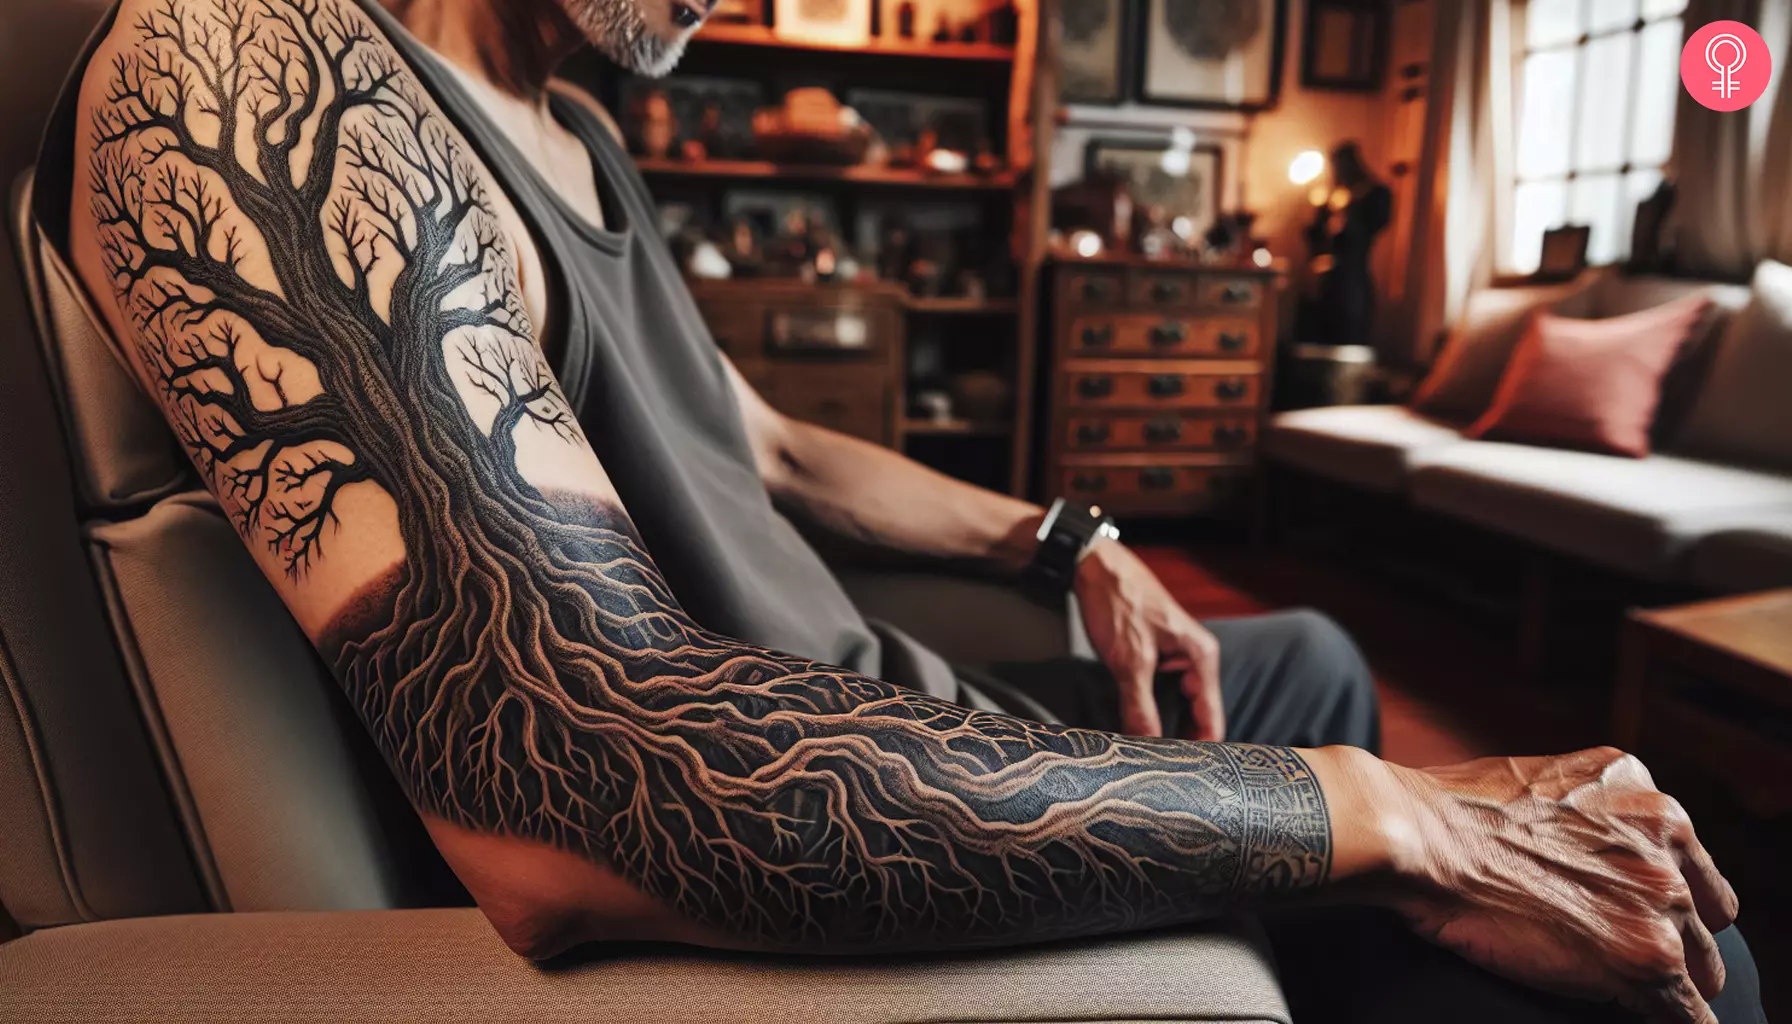 A dead tree tattoo sleeve on the arm